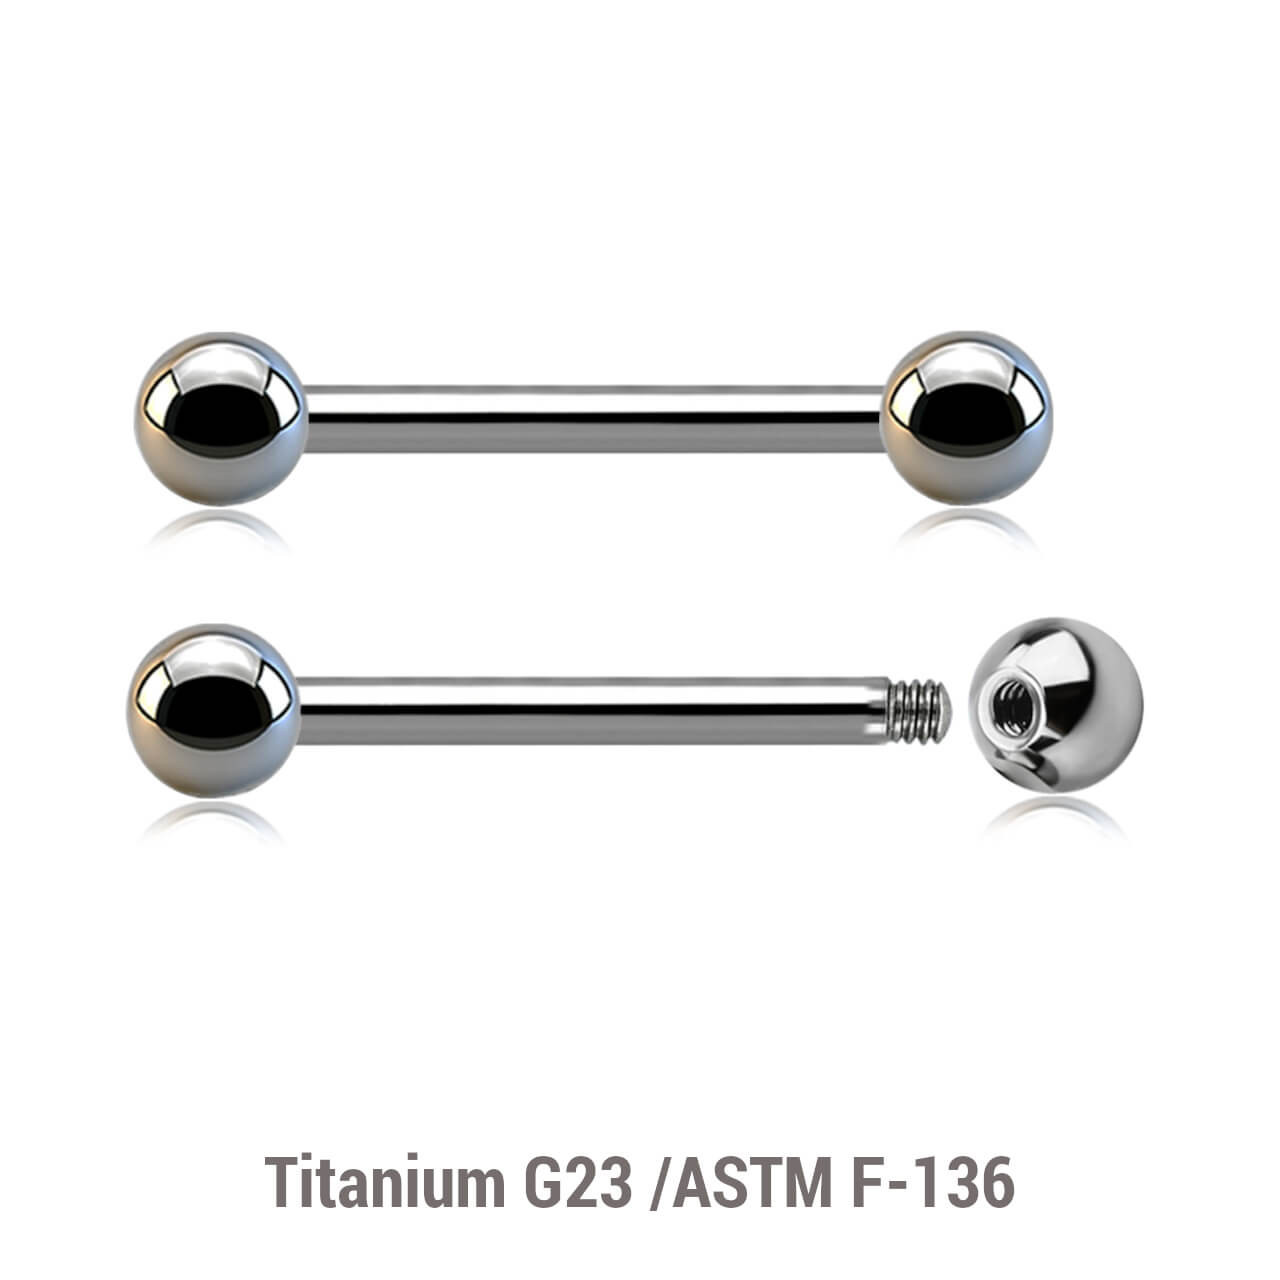 TBA16B4N Wholesale Assortment of 10 high polished titanium G23 nipple barbells, Thickness 1.6mm, Ball size 4mm